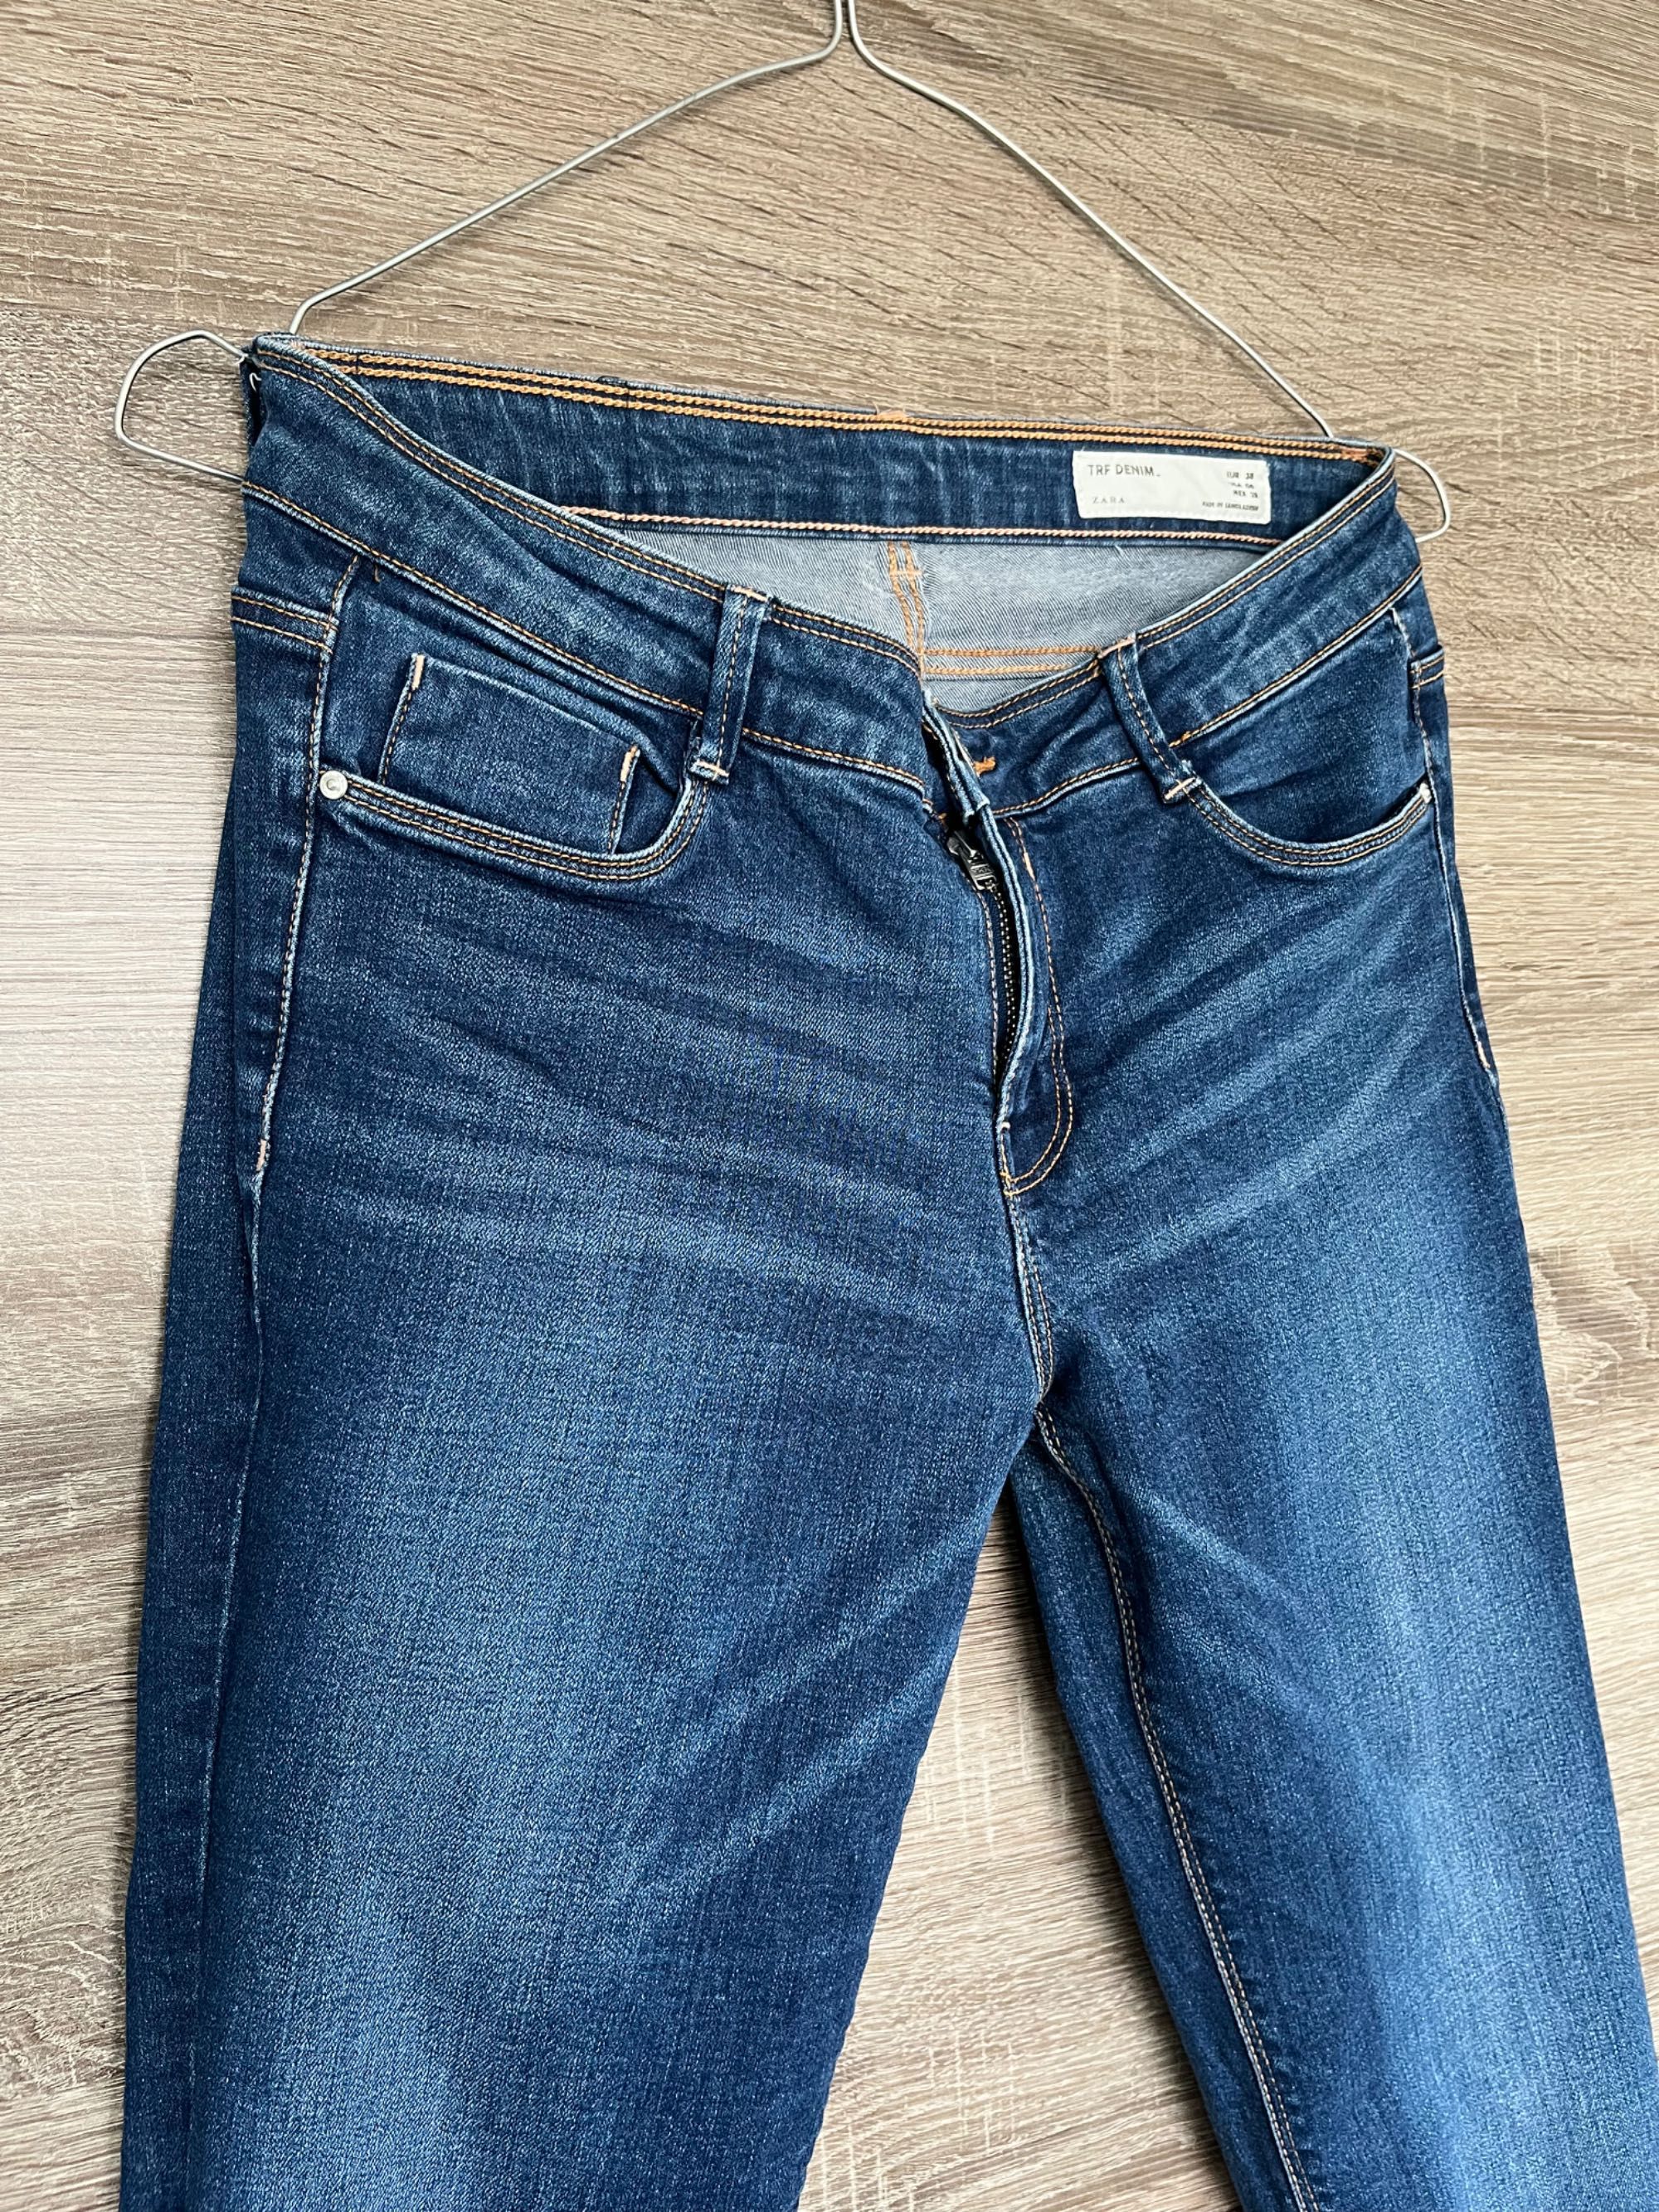 Zara /Зара дънки размер 36